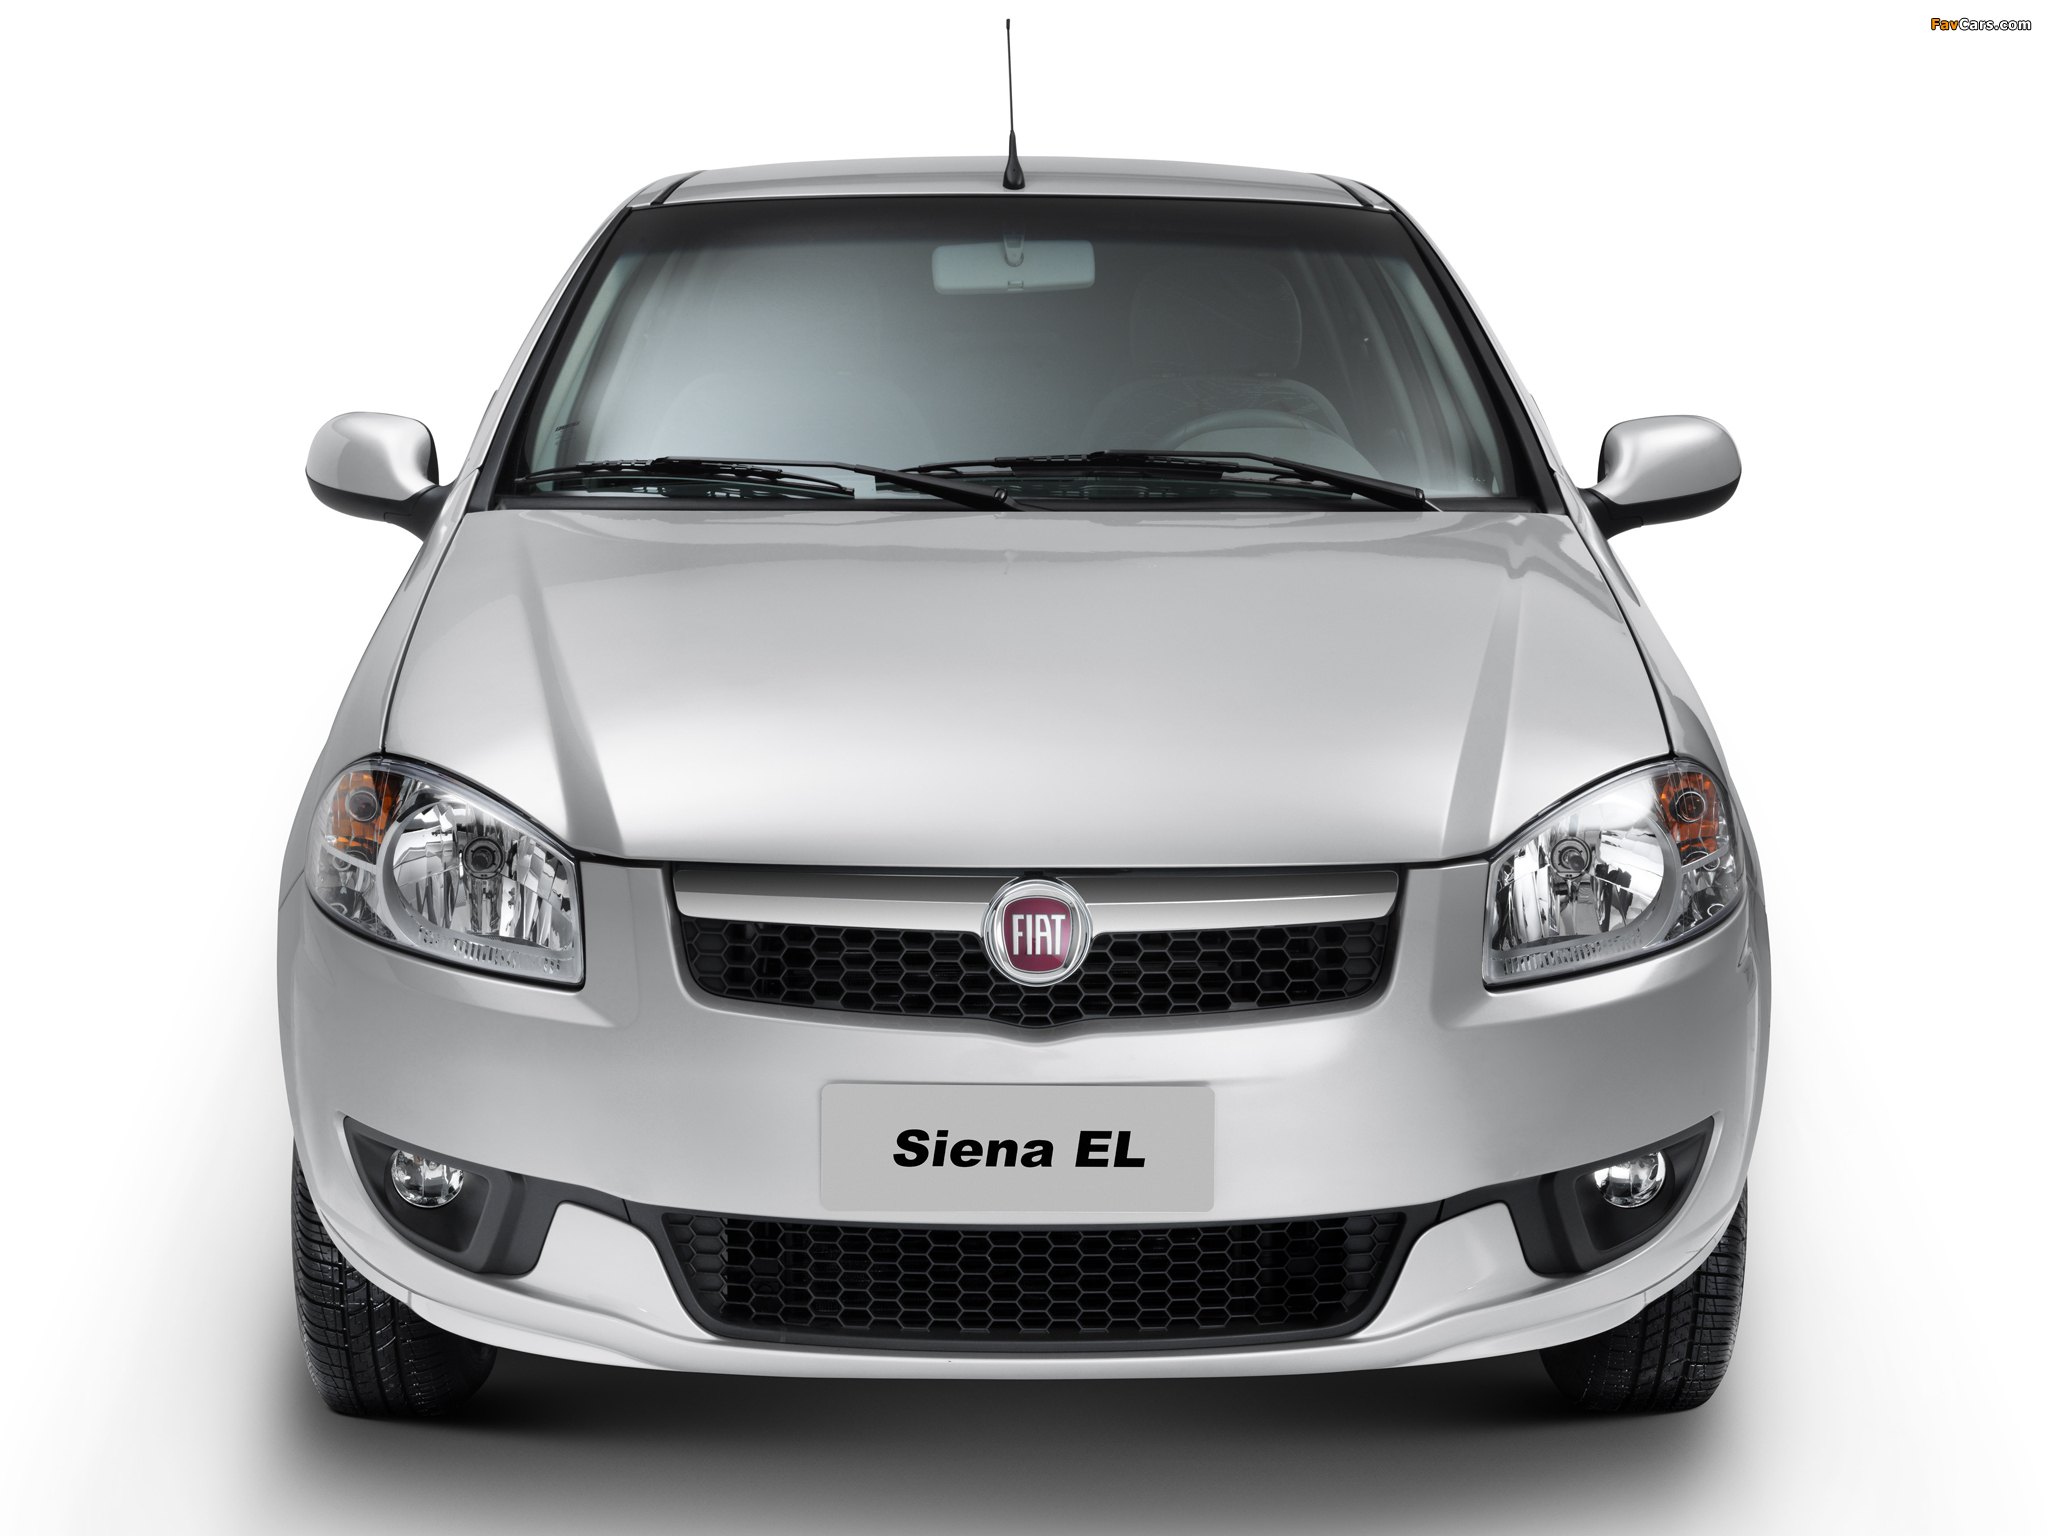 Fiat Siena EL (178) 2012 pictures (2048 x 1536)